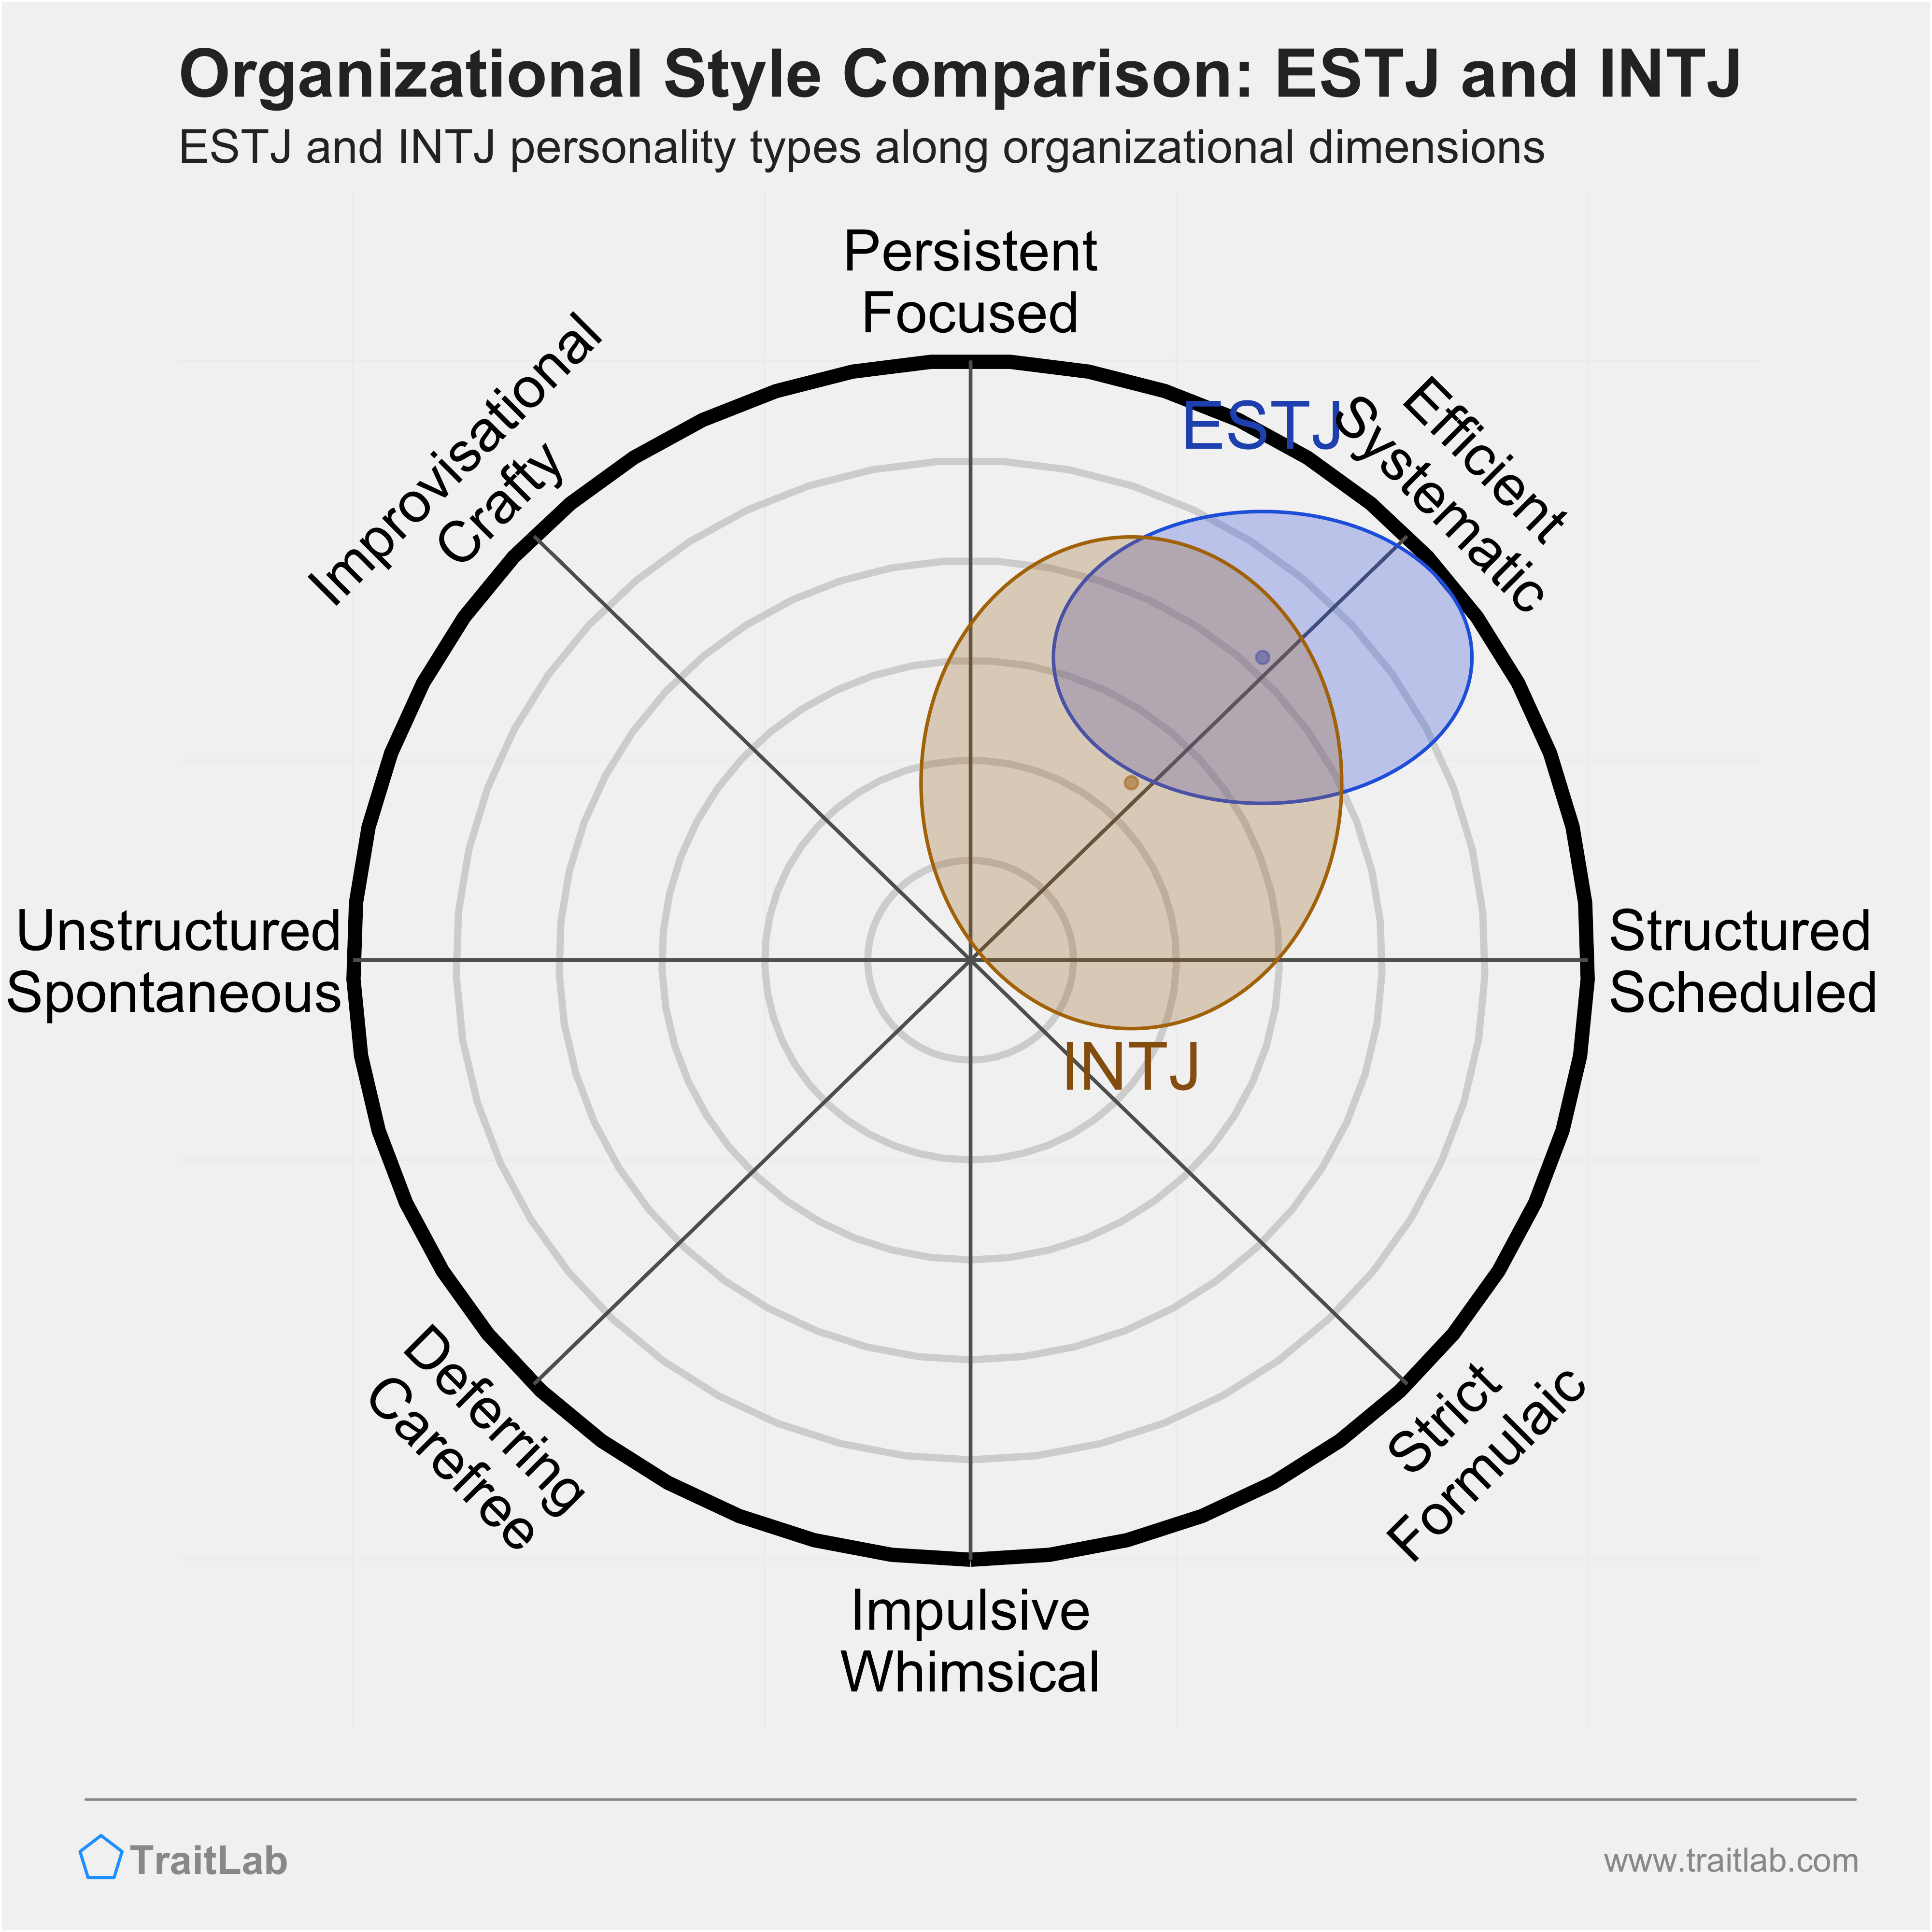 ESTJ and INTJ comparison across organizational dimensions